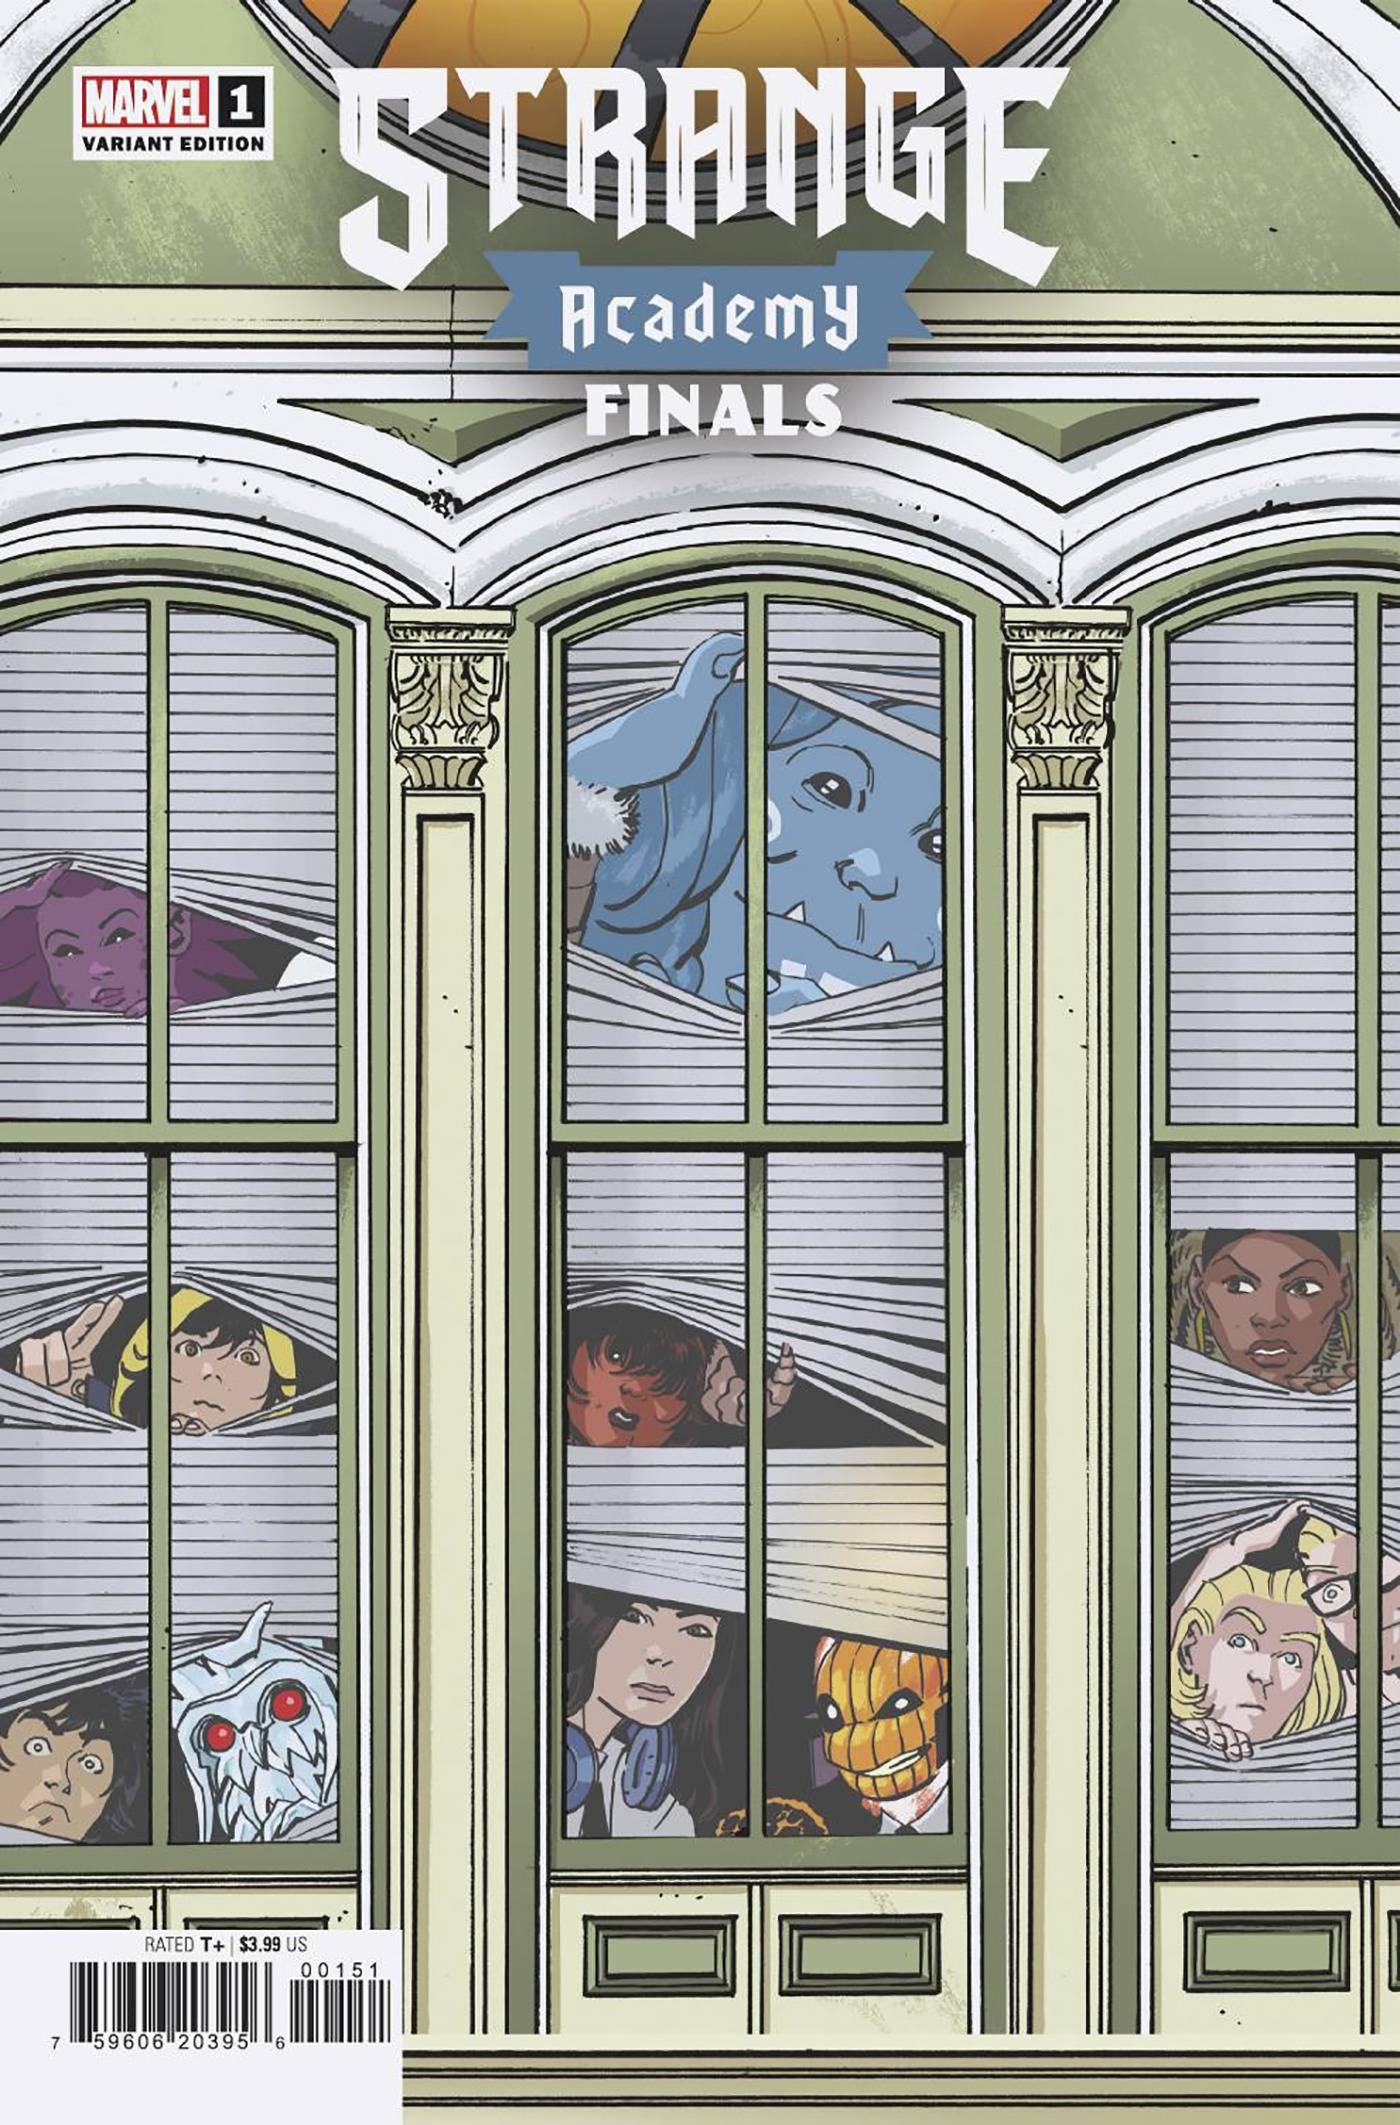 Strange Academy Finals #1 E Tom Reilly Windowshades Variant (10/26/2022) Marvel